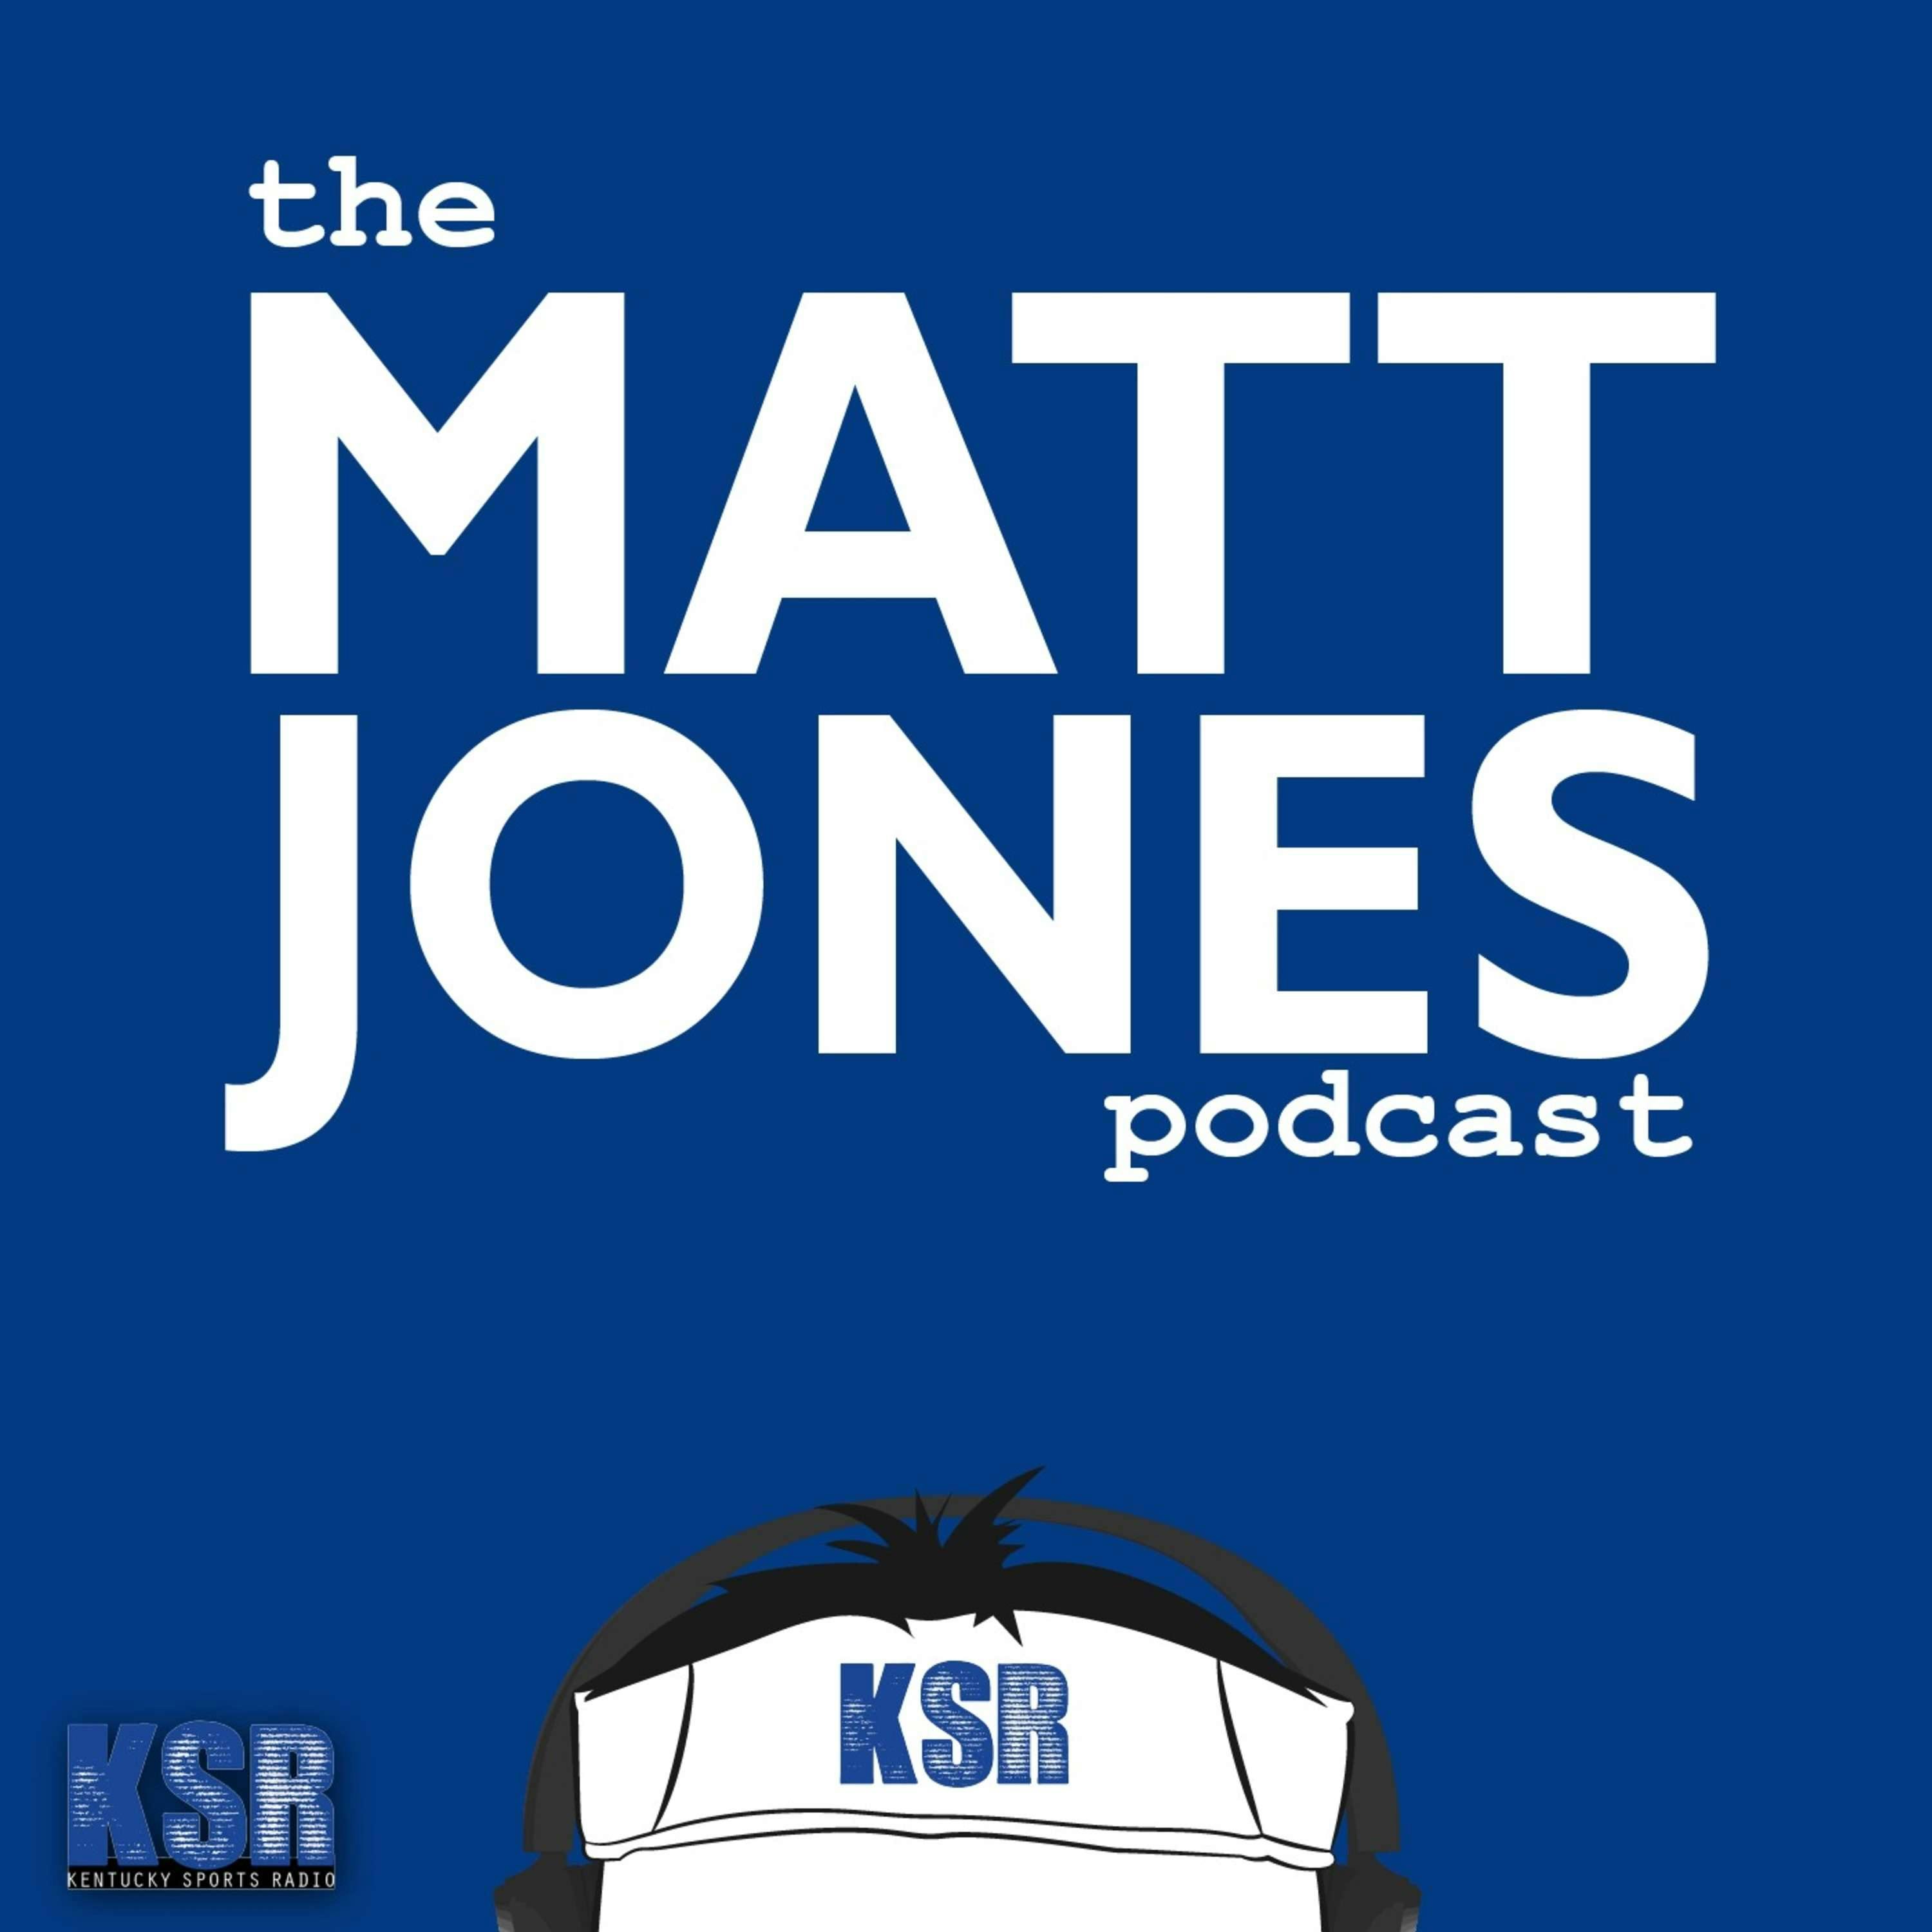 The Matt Jones Podcast: E41 Seth Greenberg & T.J. Walker